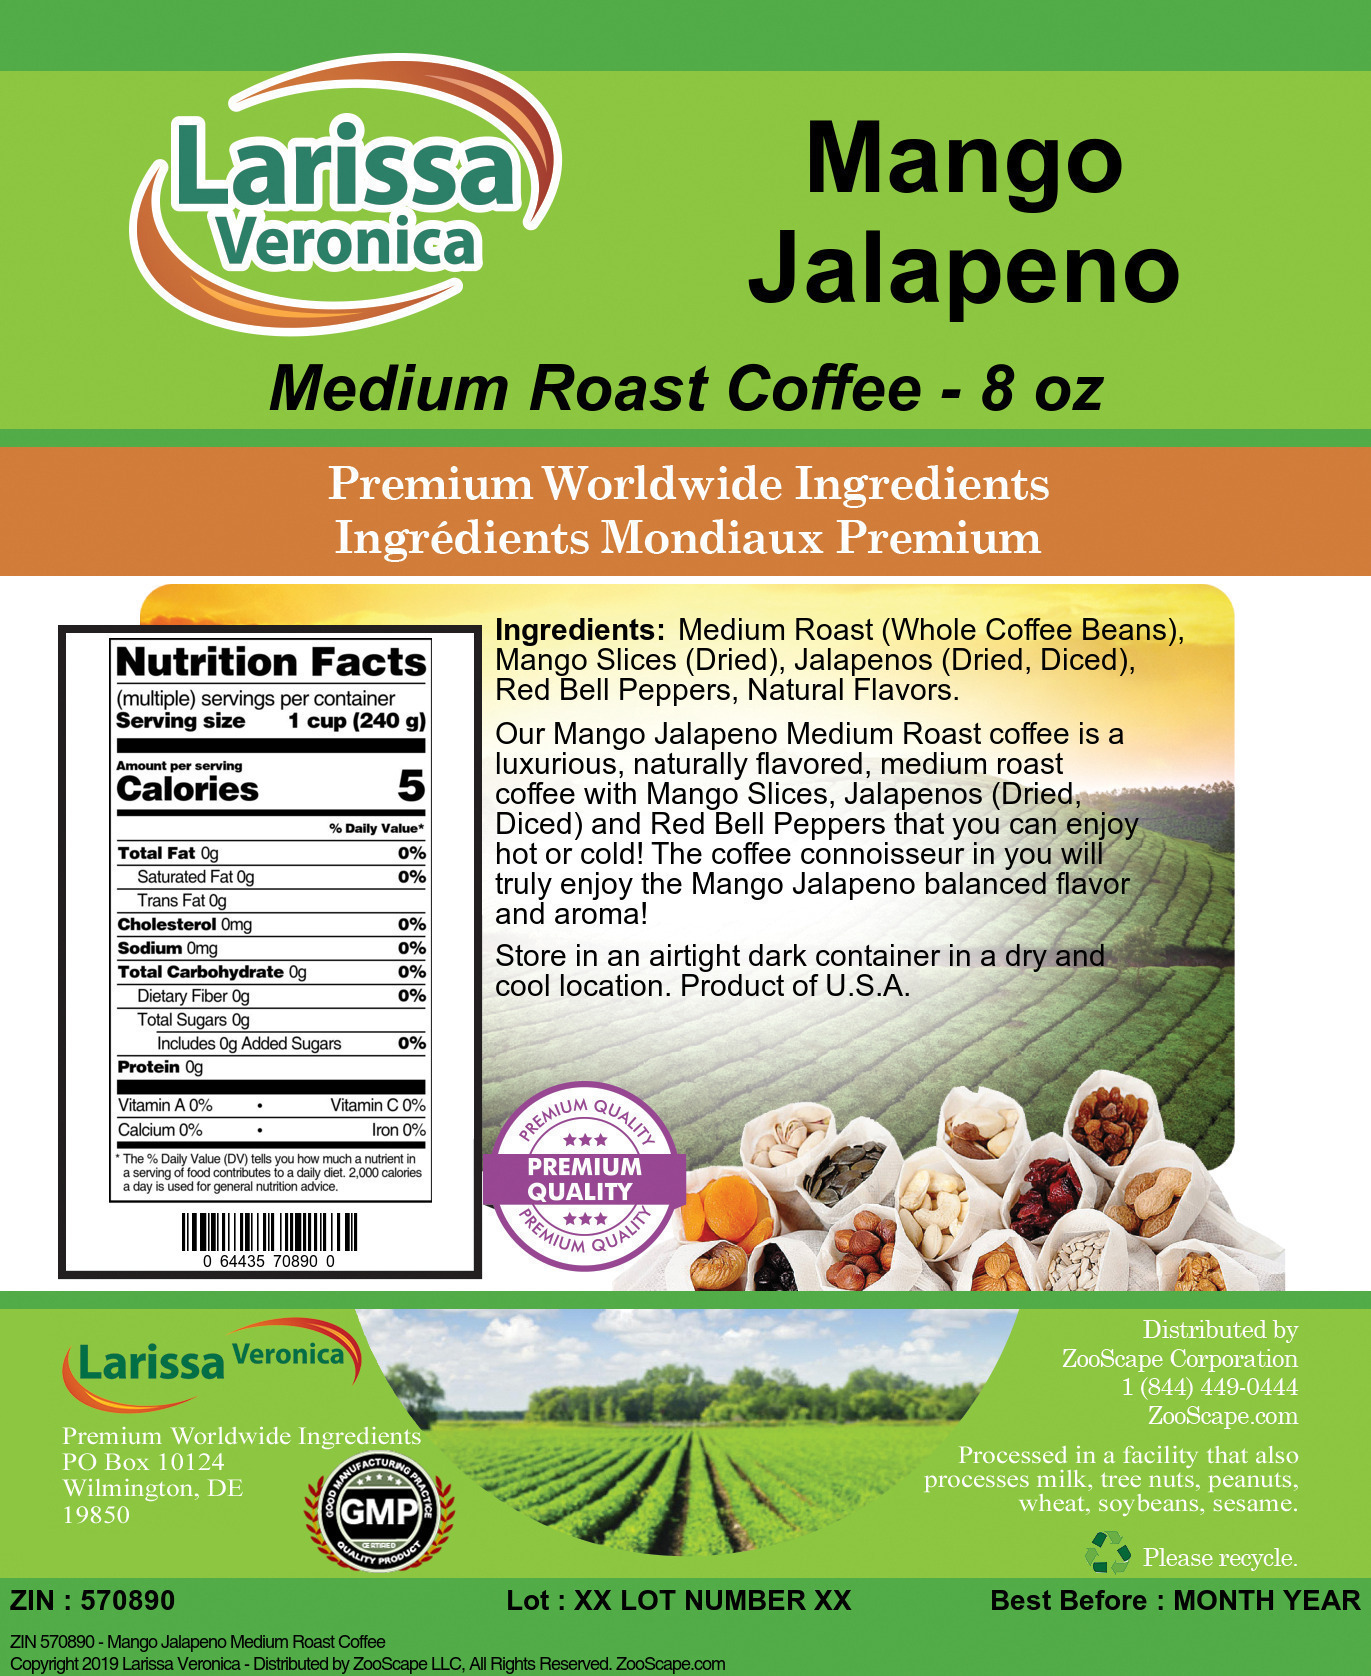 Mango Jalapeno Medium Roast Coffee - Label